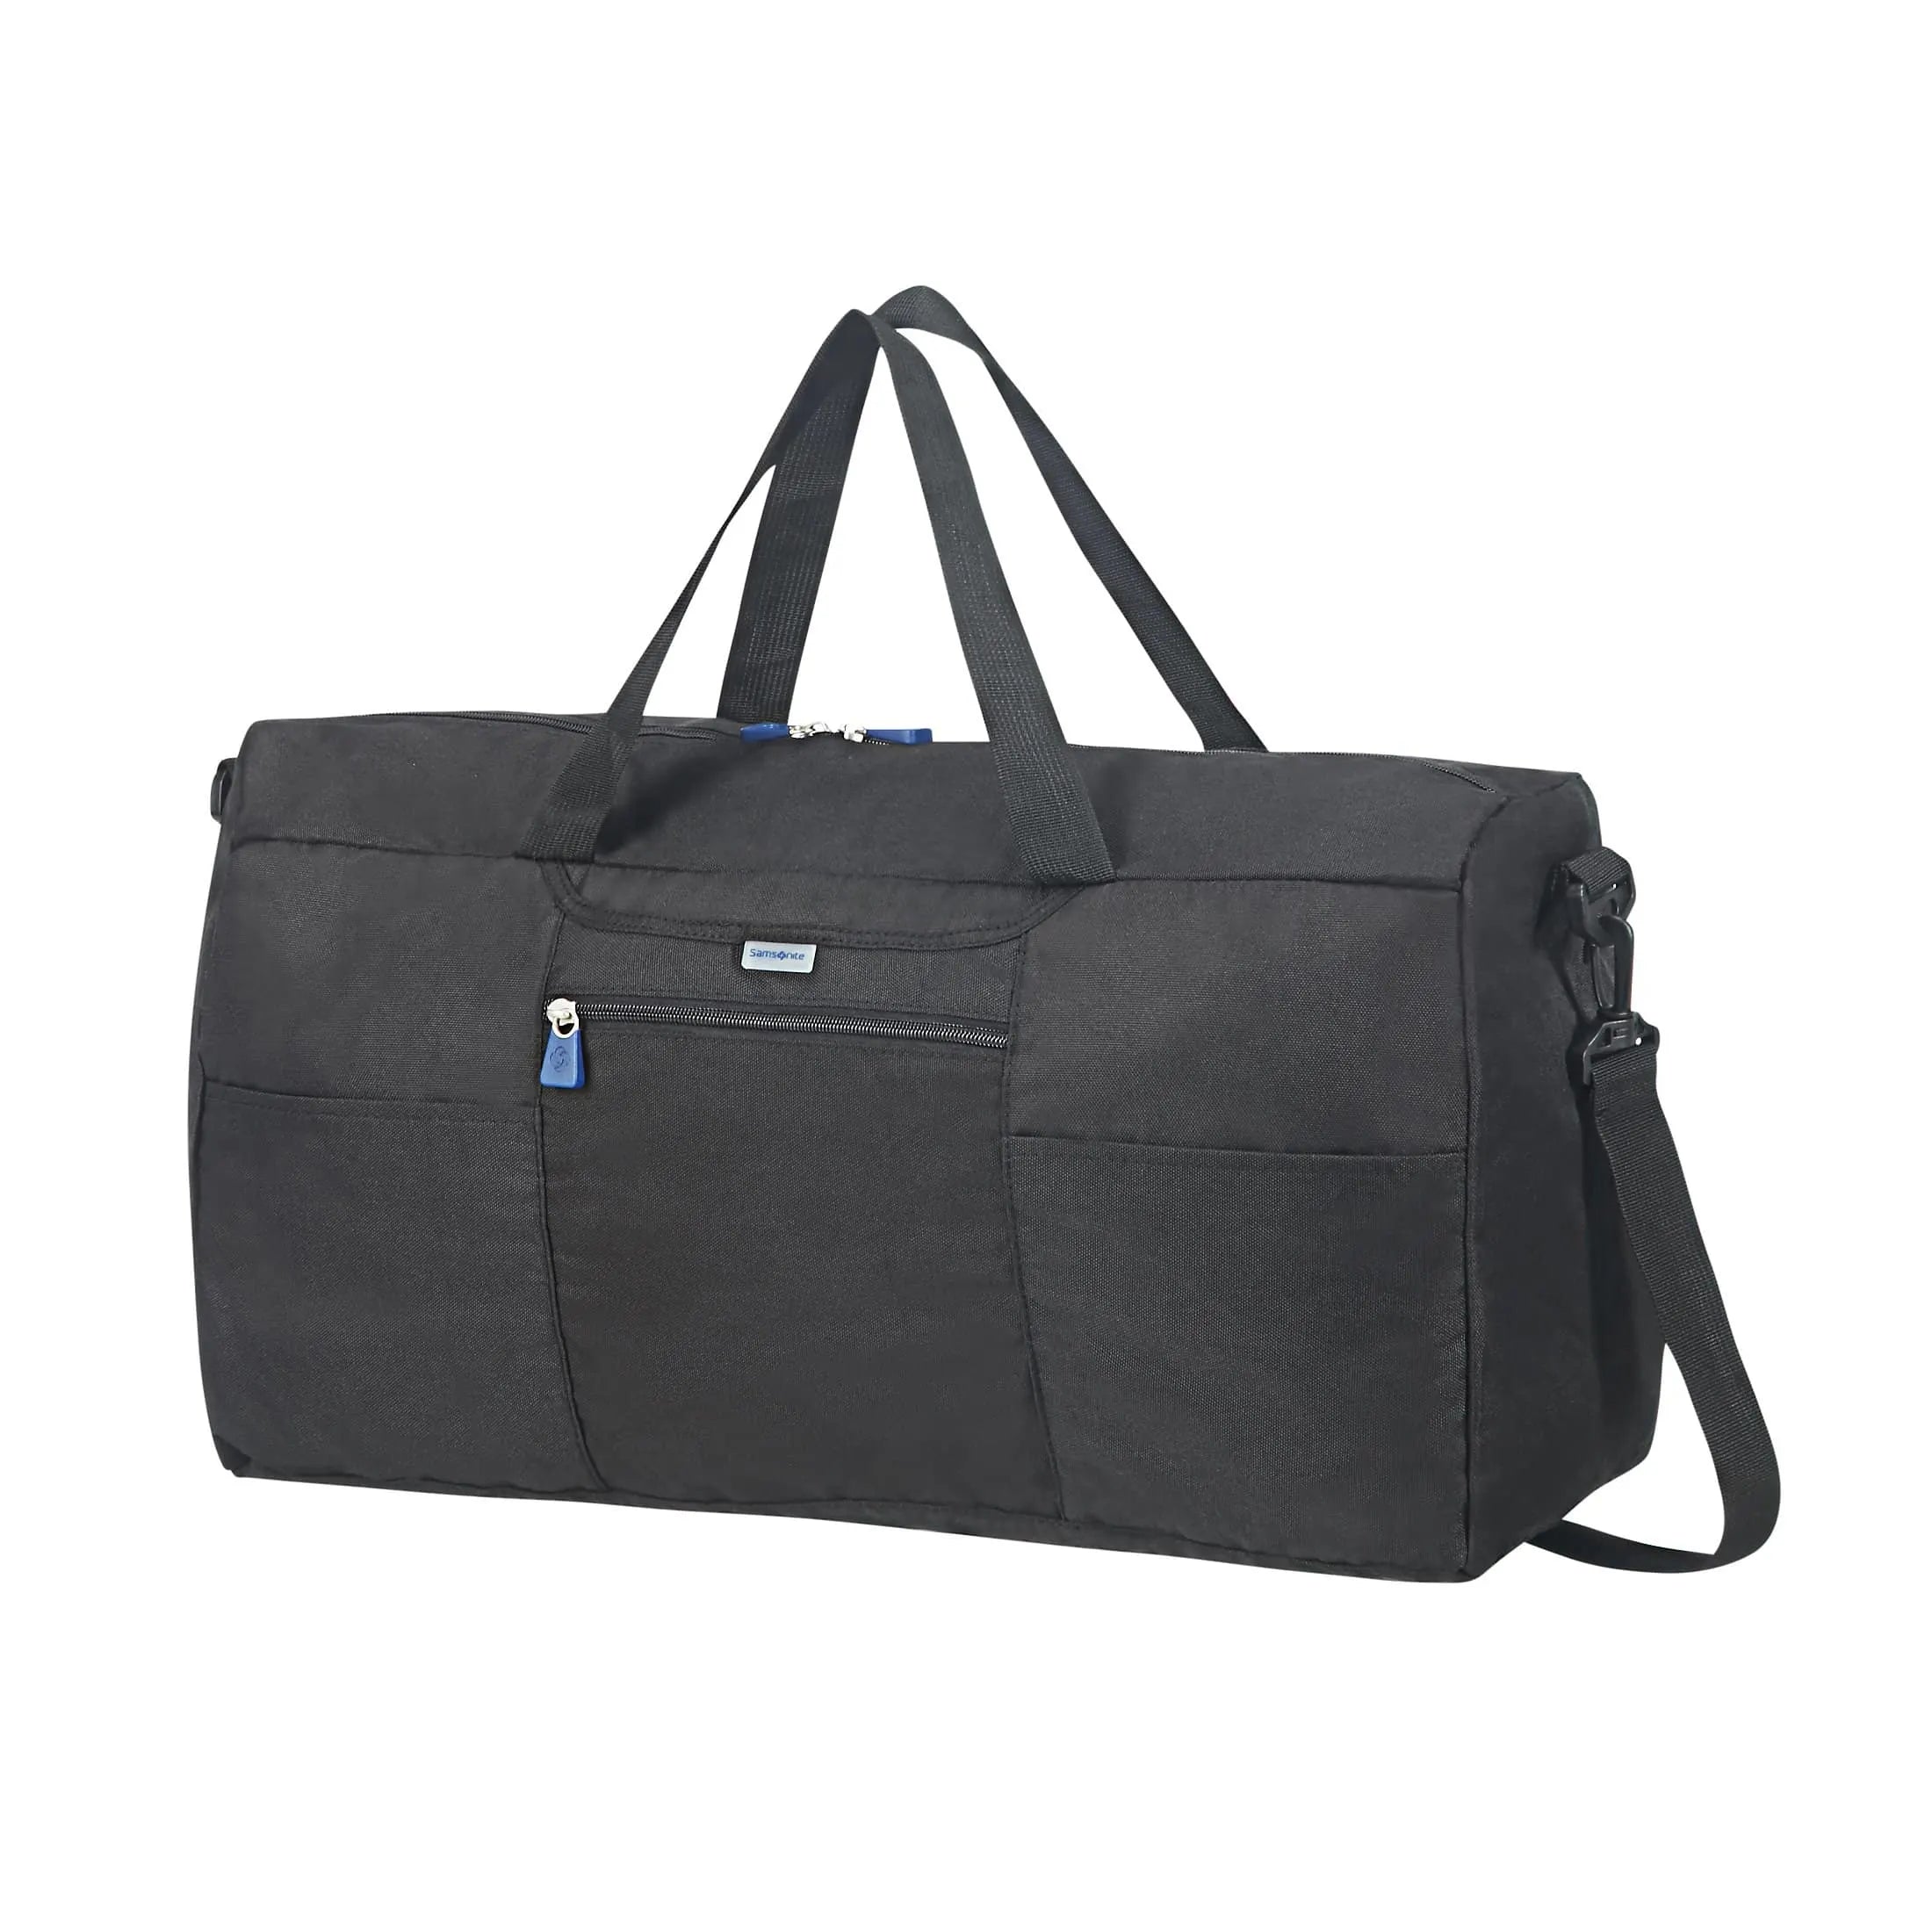 Samsonite Travel Accessories foldable travel bag 55 cm - black